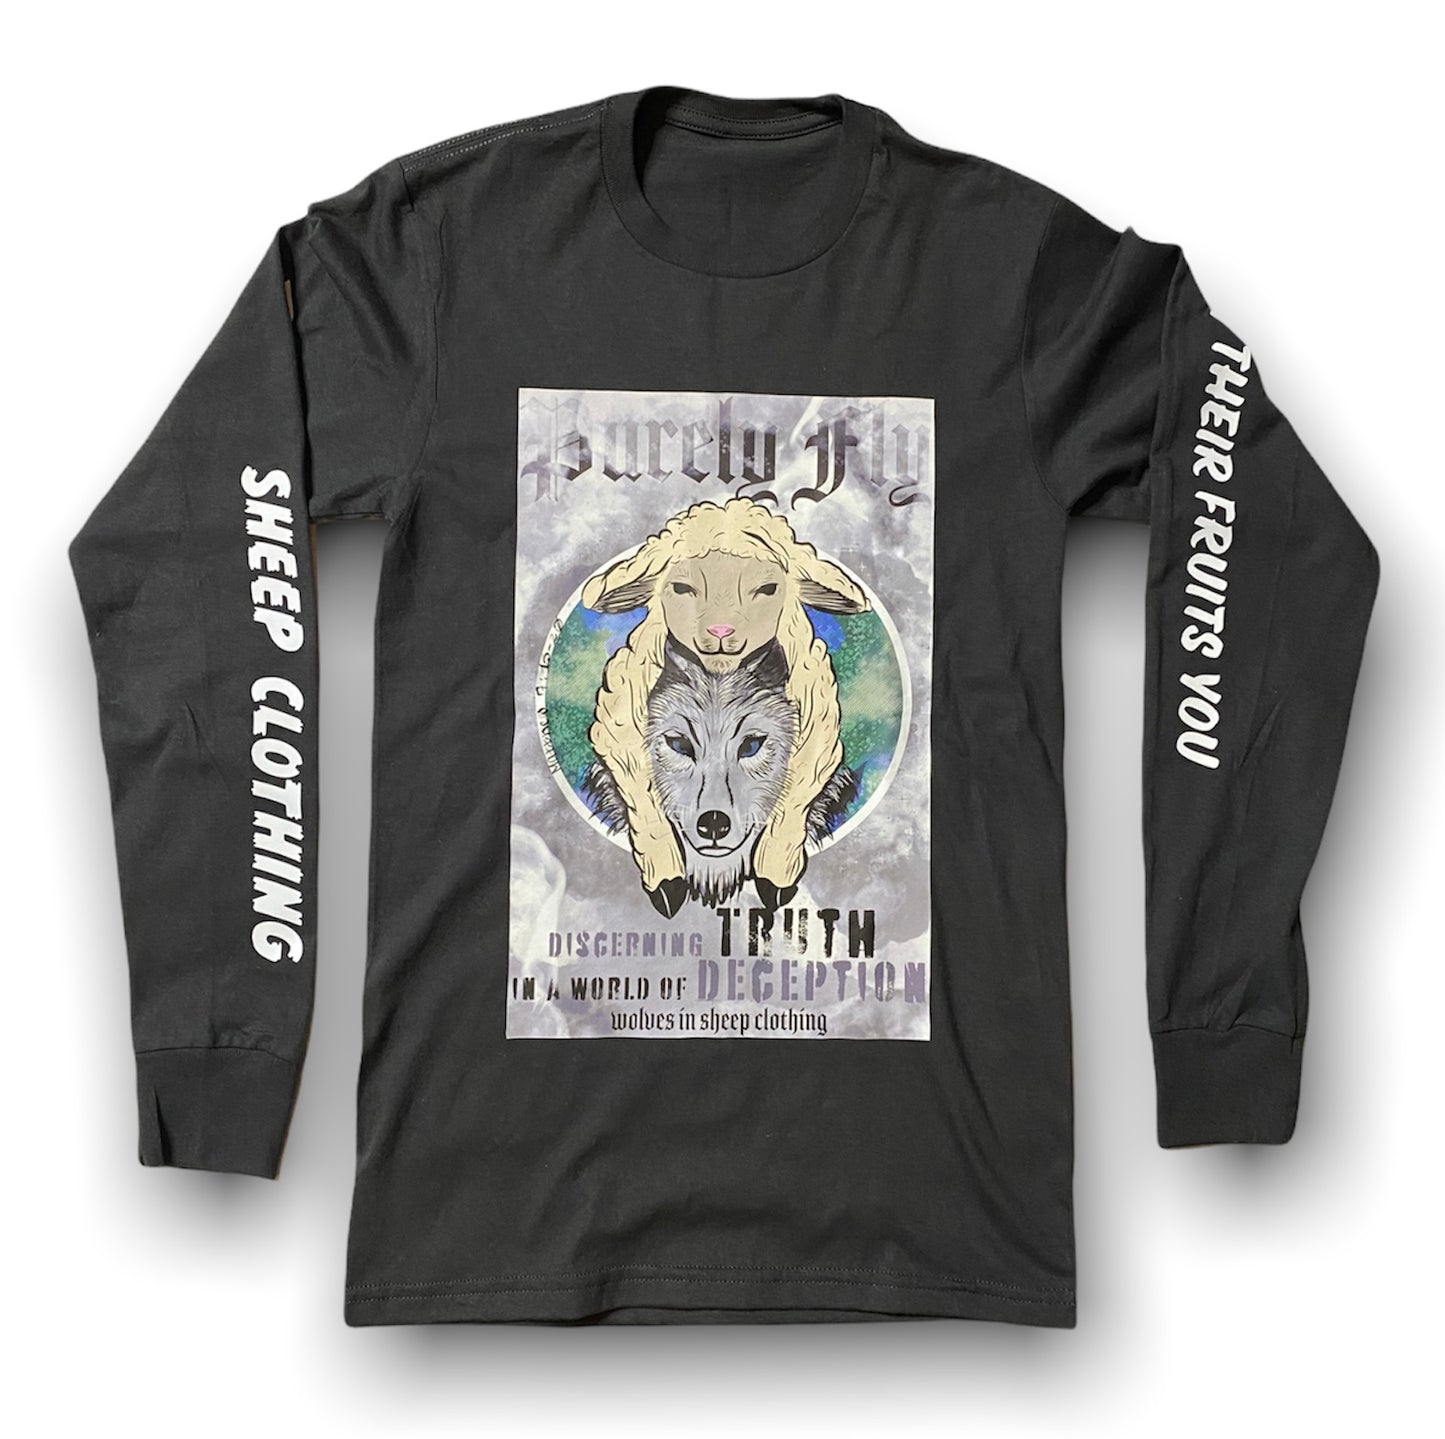 Wolves in Sheep clothing - Unisex (Front & back designed)